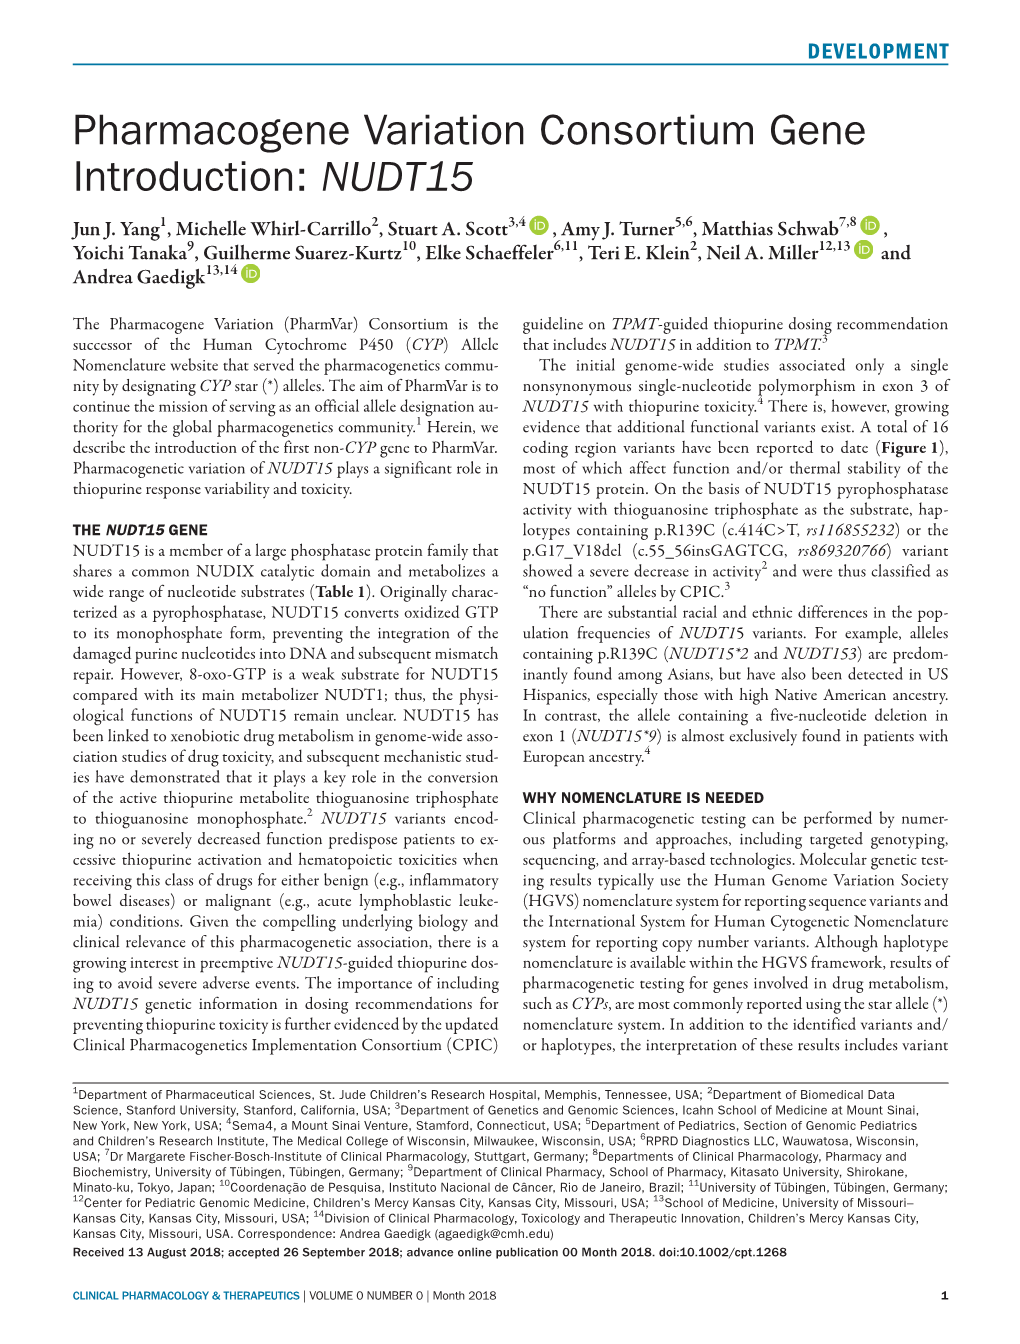 Pharmacogene Variation Consortium Gene Introduction: NUDT15 Jun J